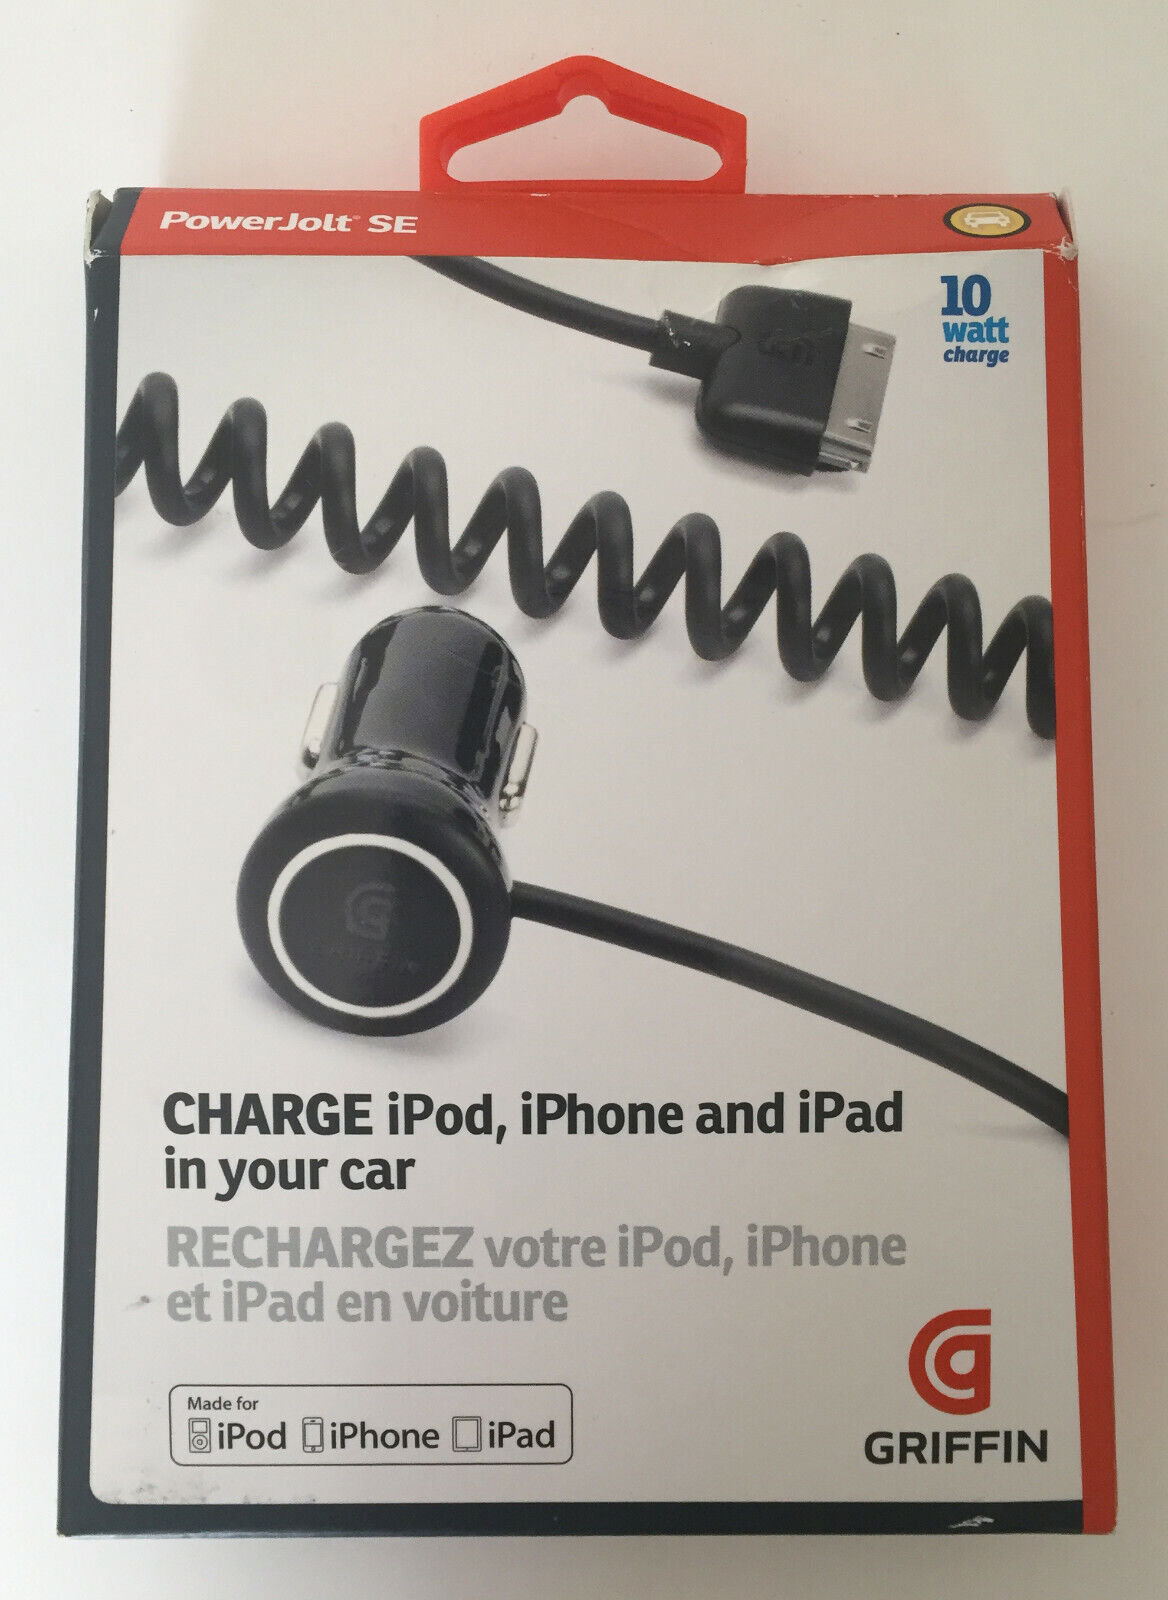 Griffin Power Jolt SE Car Charger iPod, iPhone, iPad 10 watt GC23090 